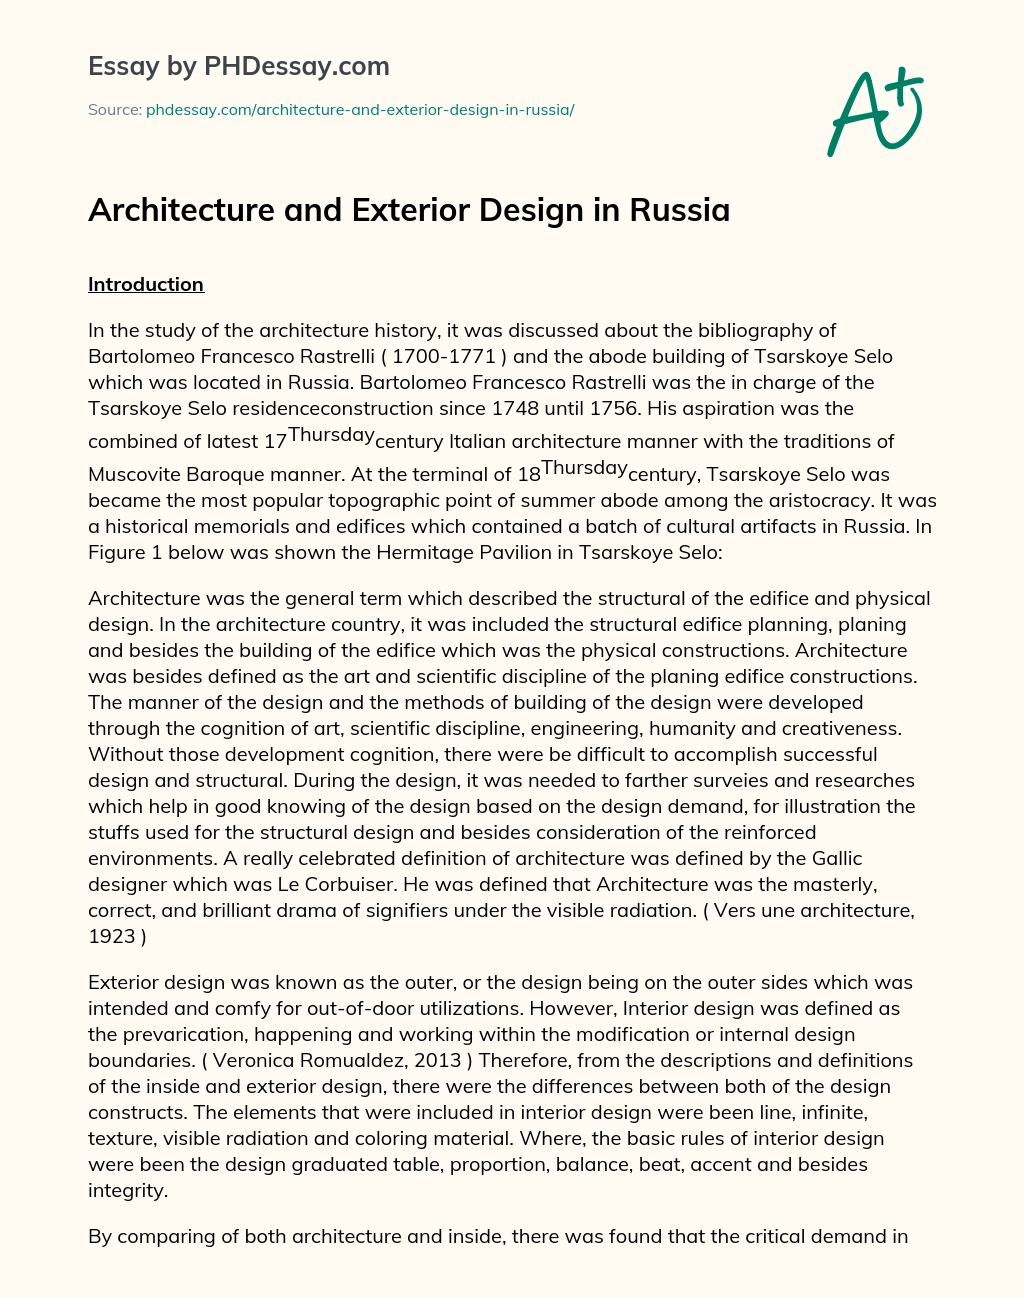 Architecture and Exterior Design in Russia essay